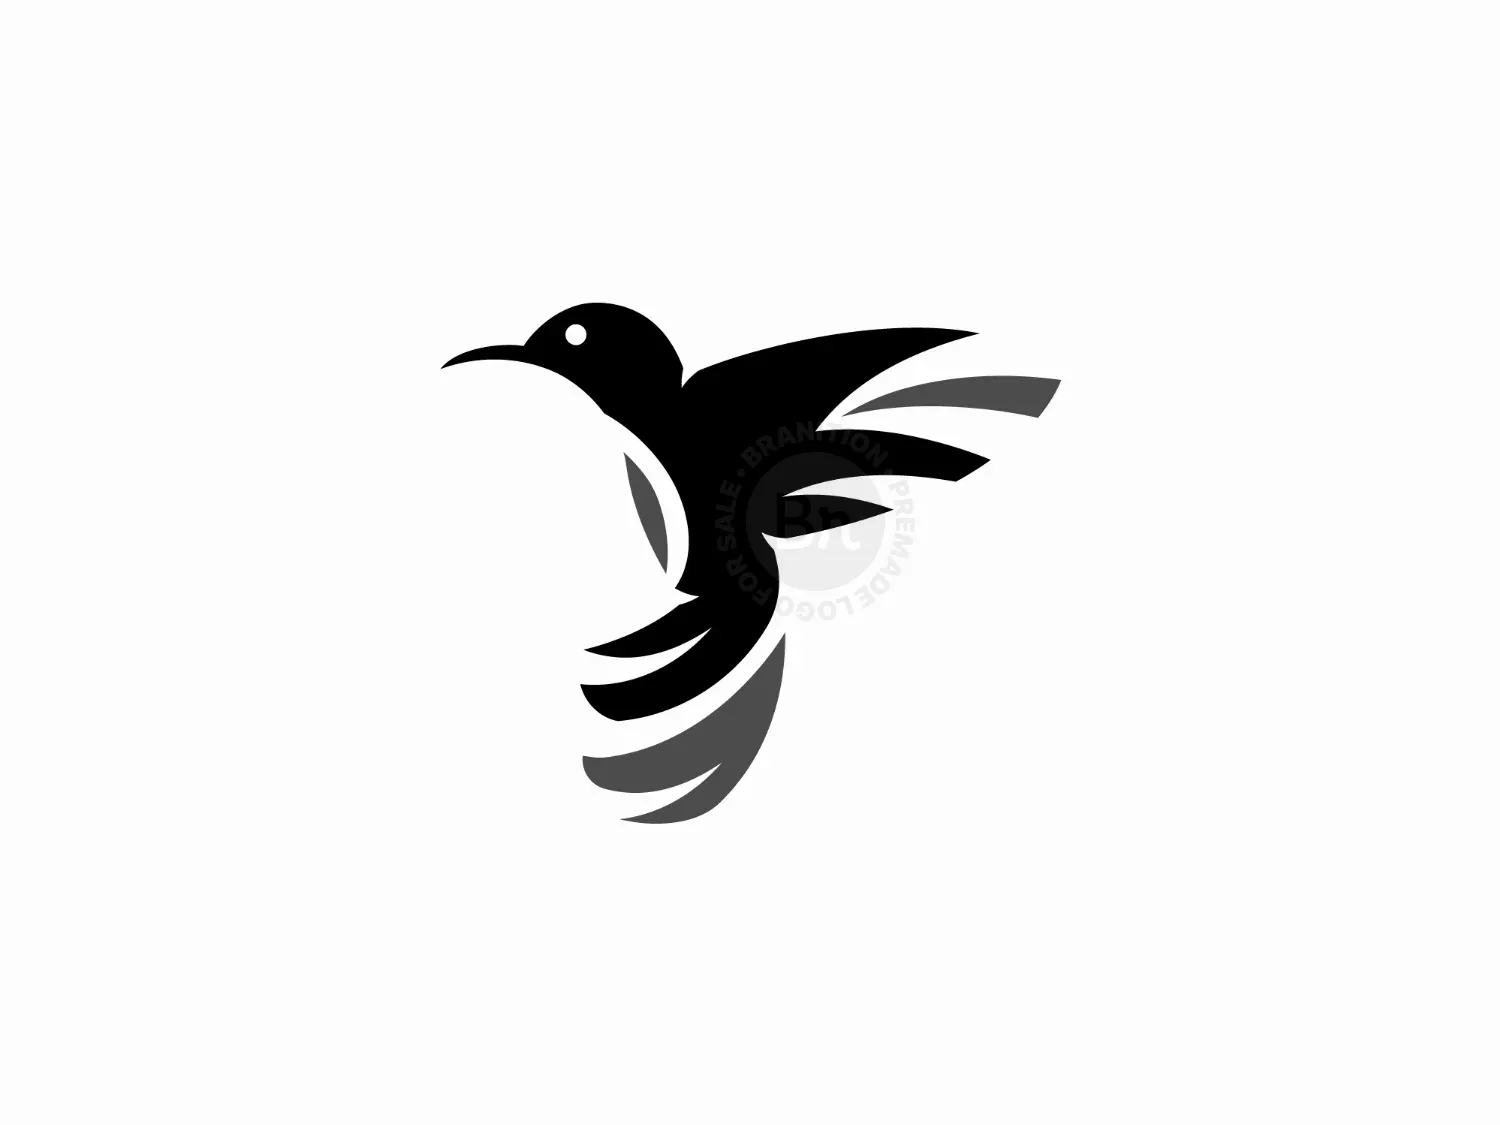 Hummingbird Logo Photos and Images | Shutterstock